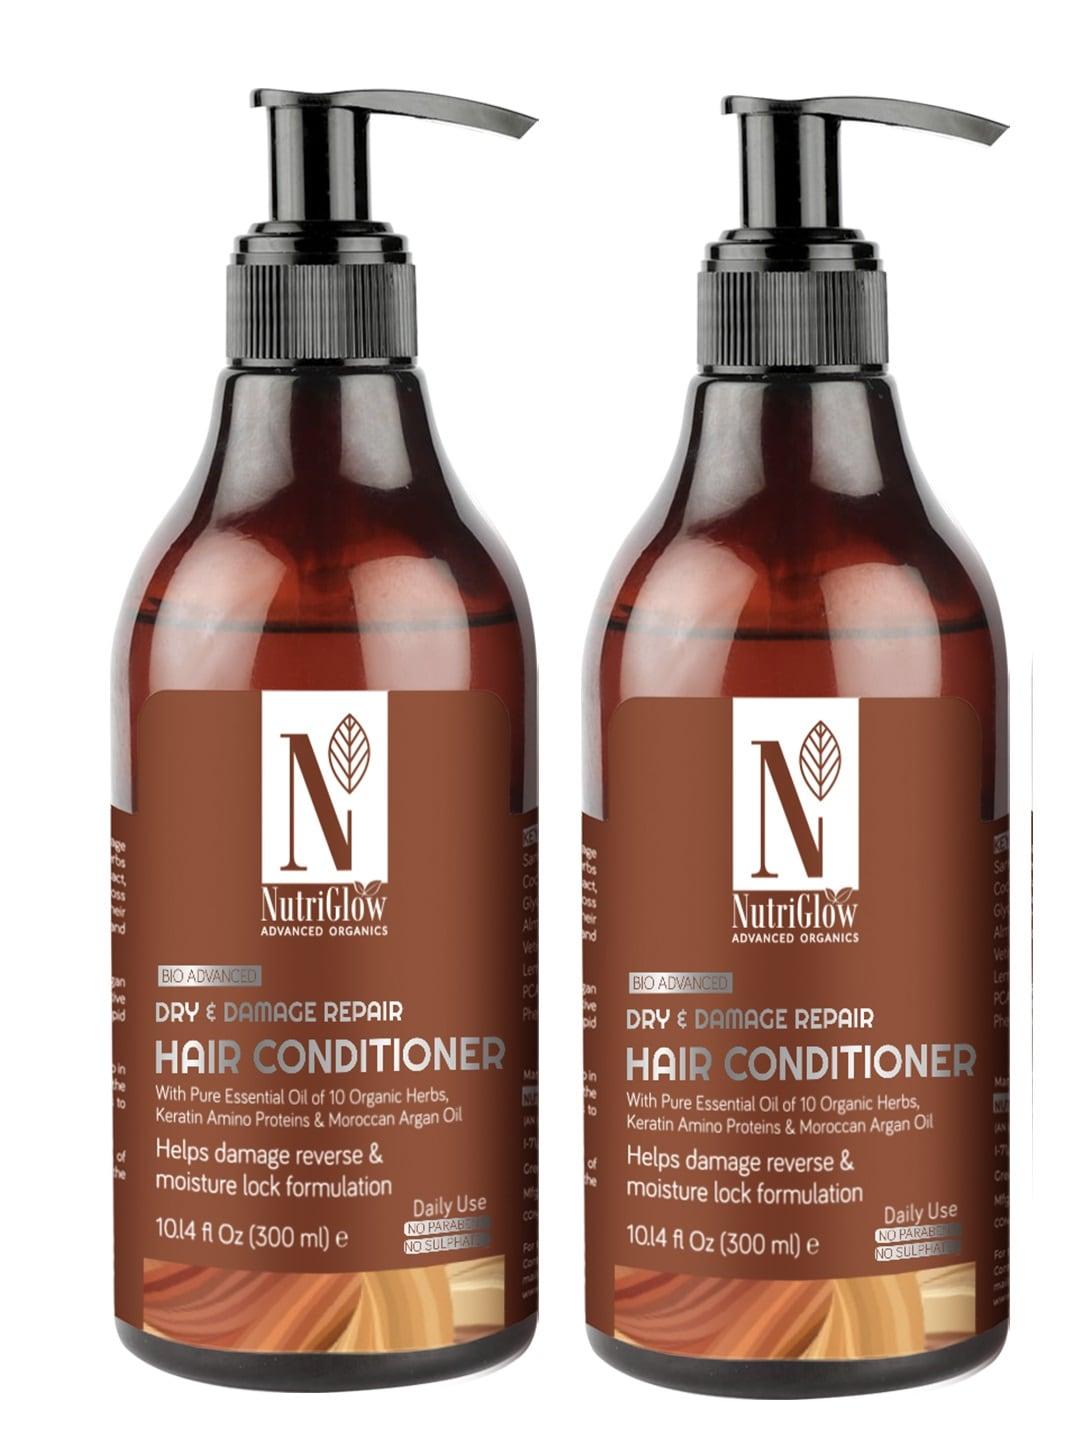 nutriglow-advanced-organics-pack-of-2-bio-advanced-dry-&-damage-repair-hair-conditioner